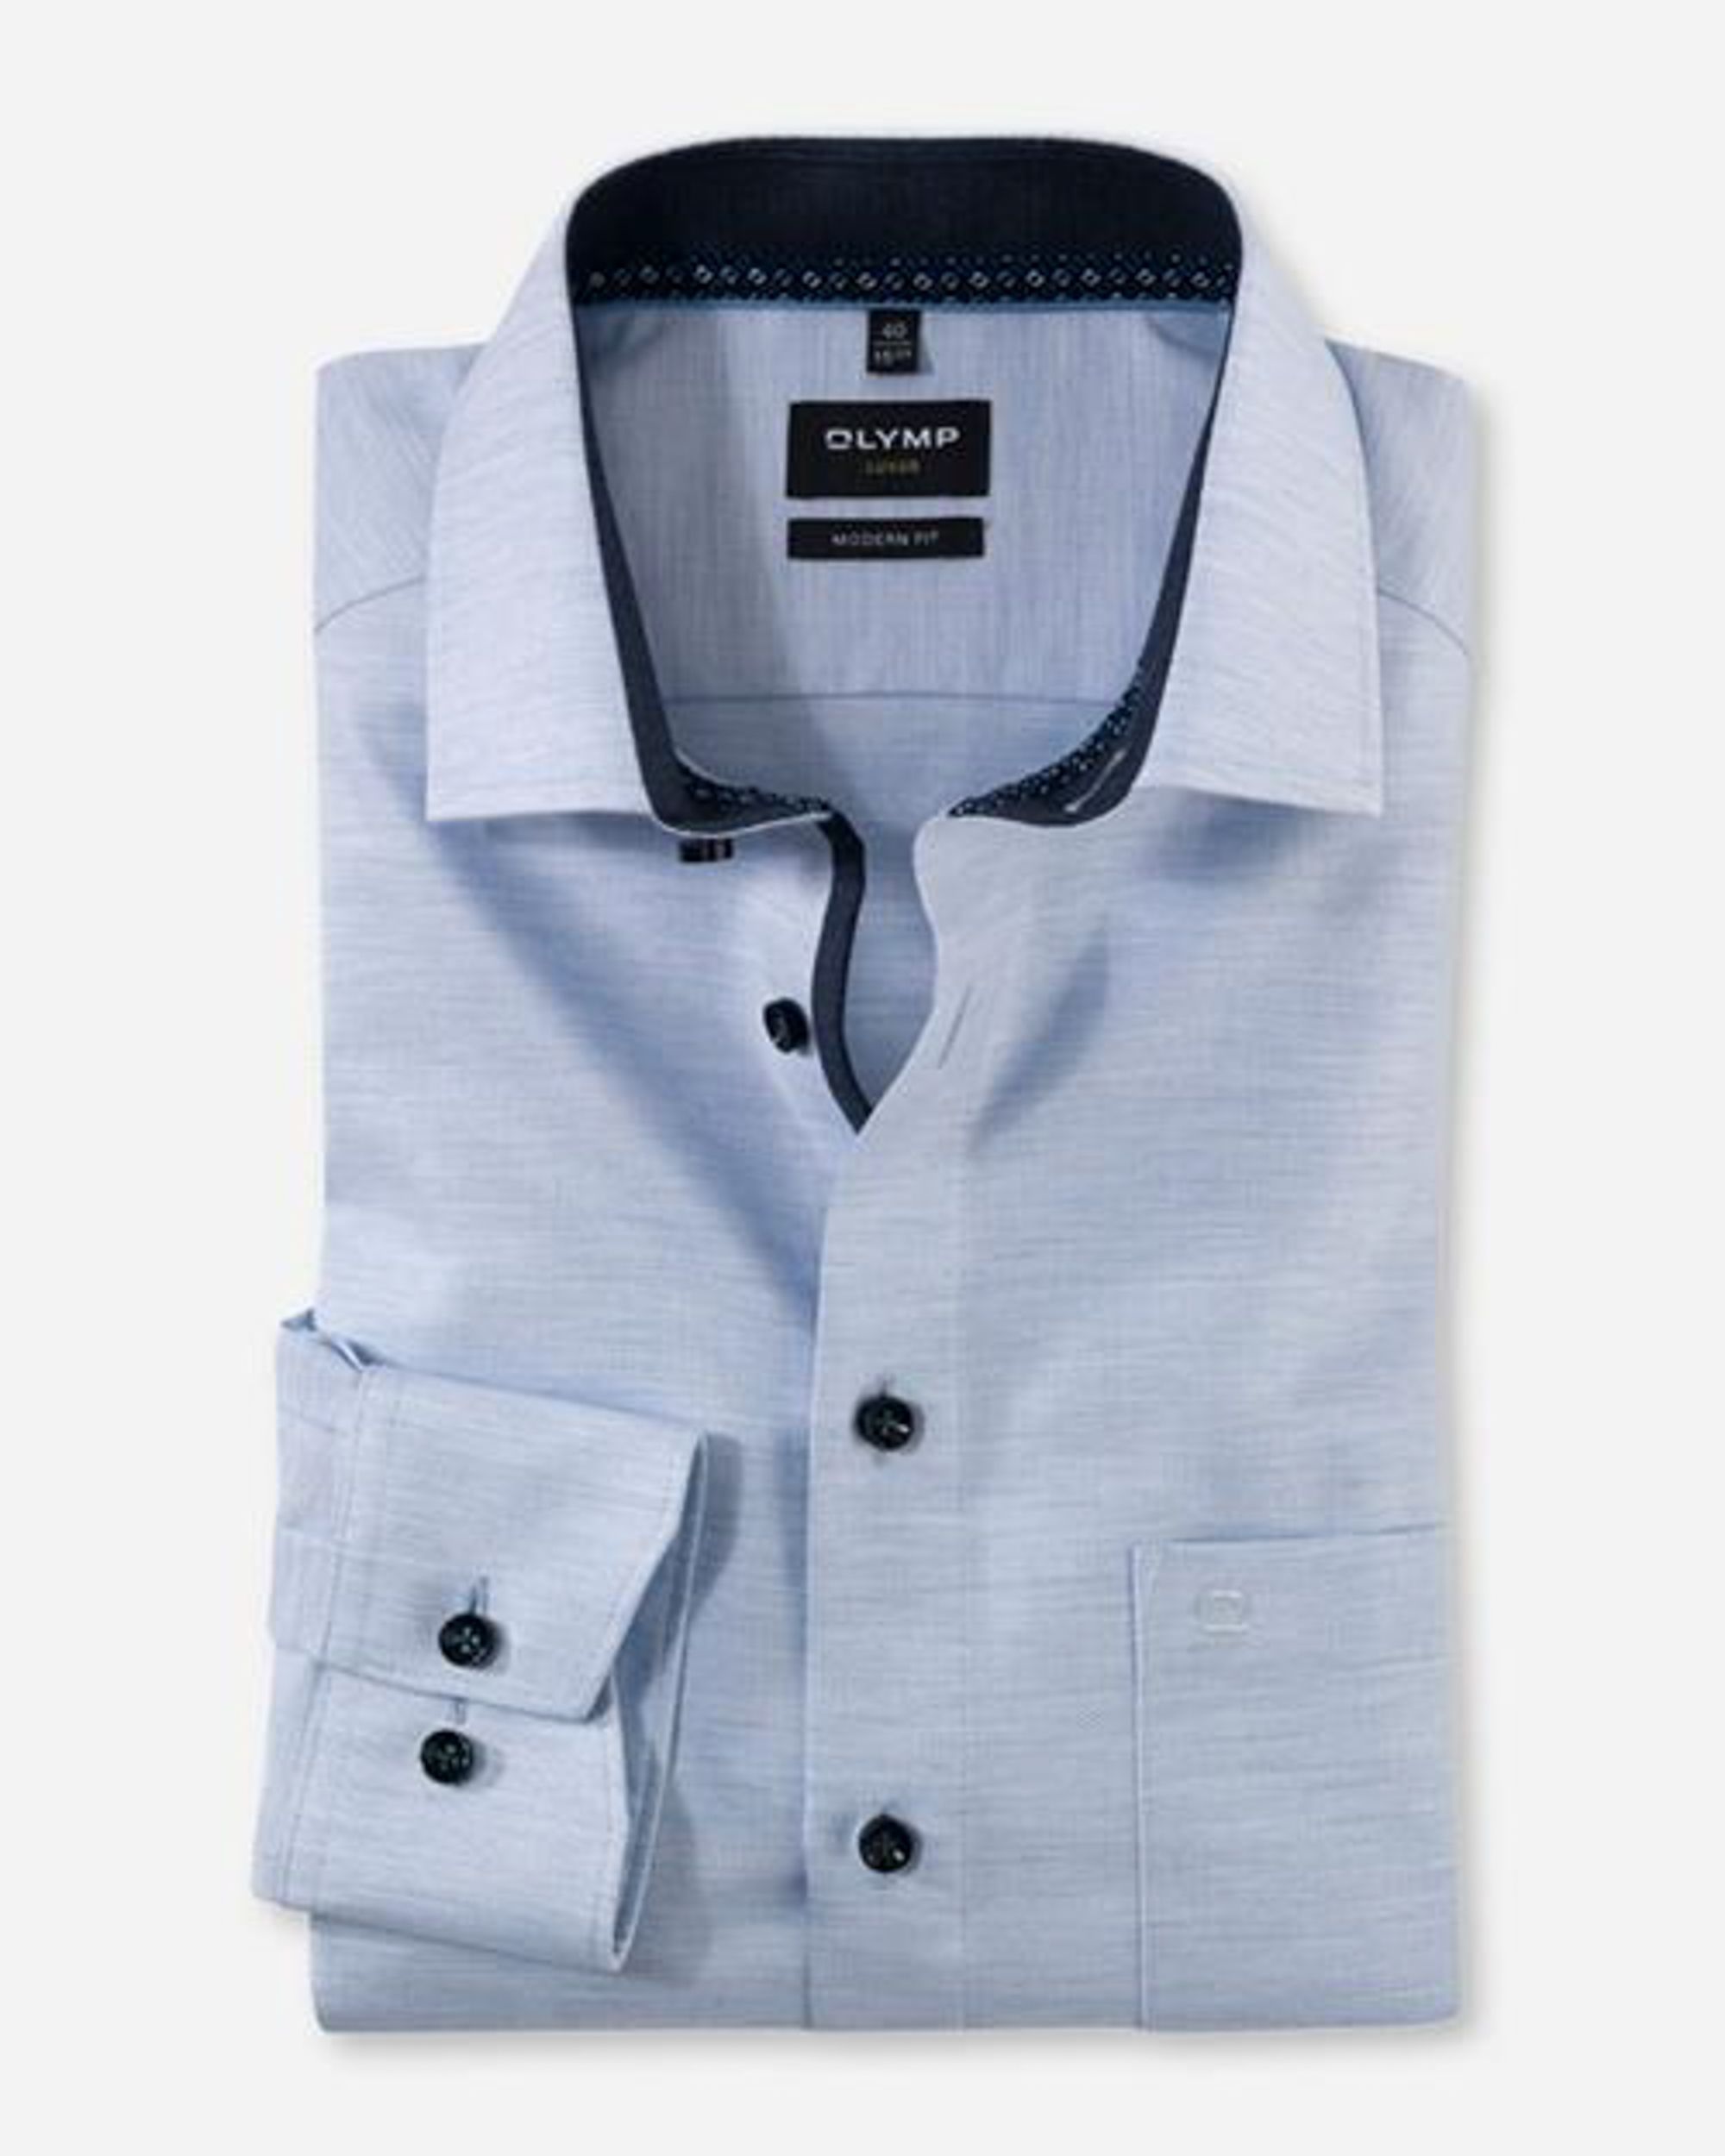 OLYMP Modern Fit Overhemd LM Blauw 081400-001-37